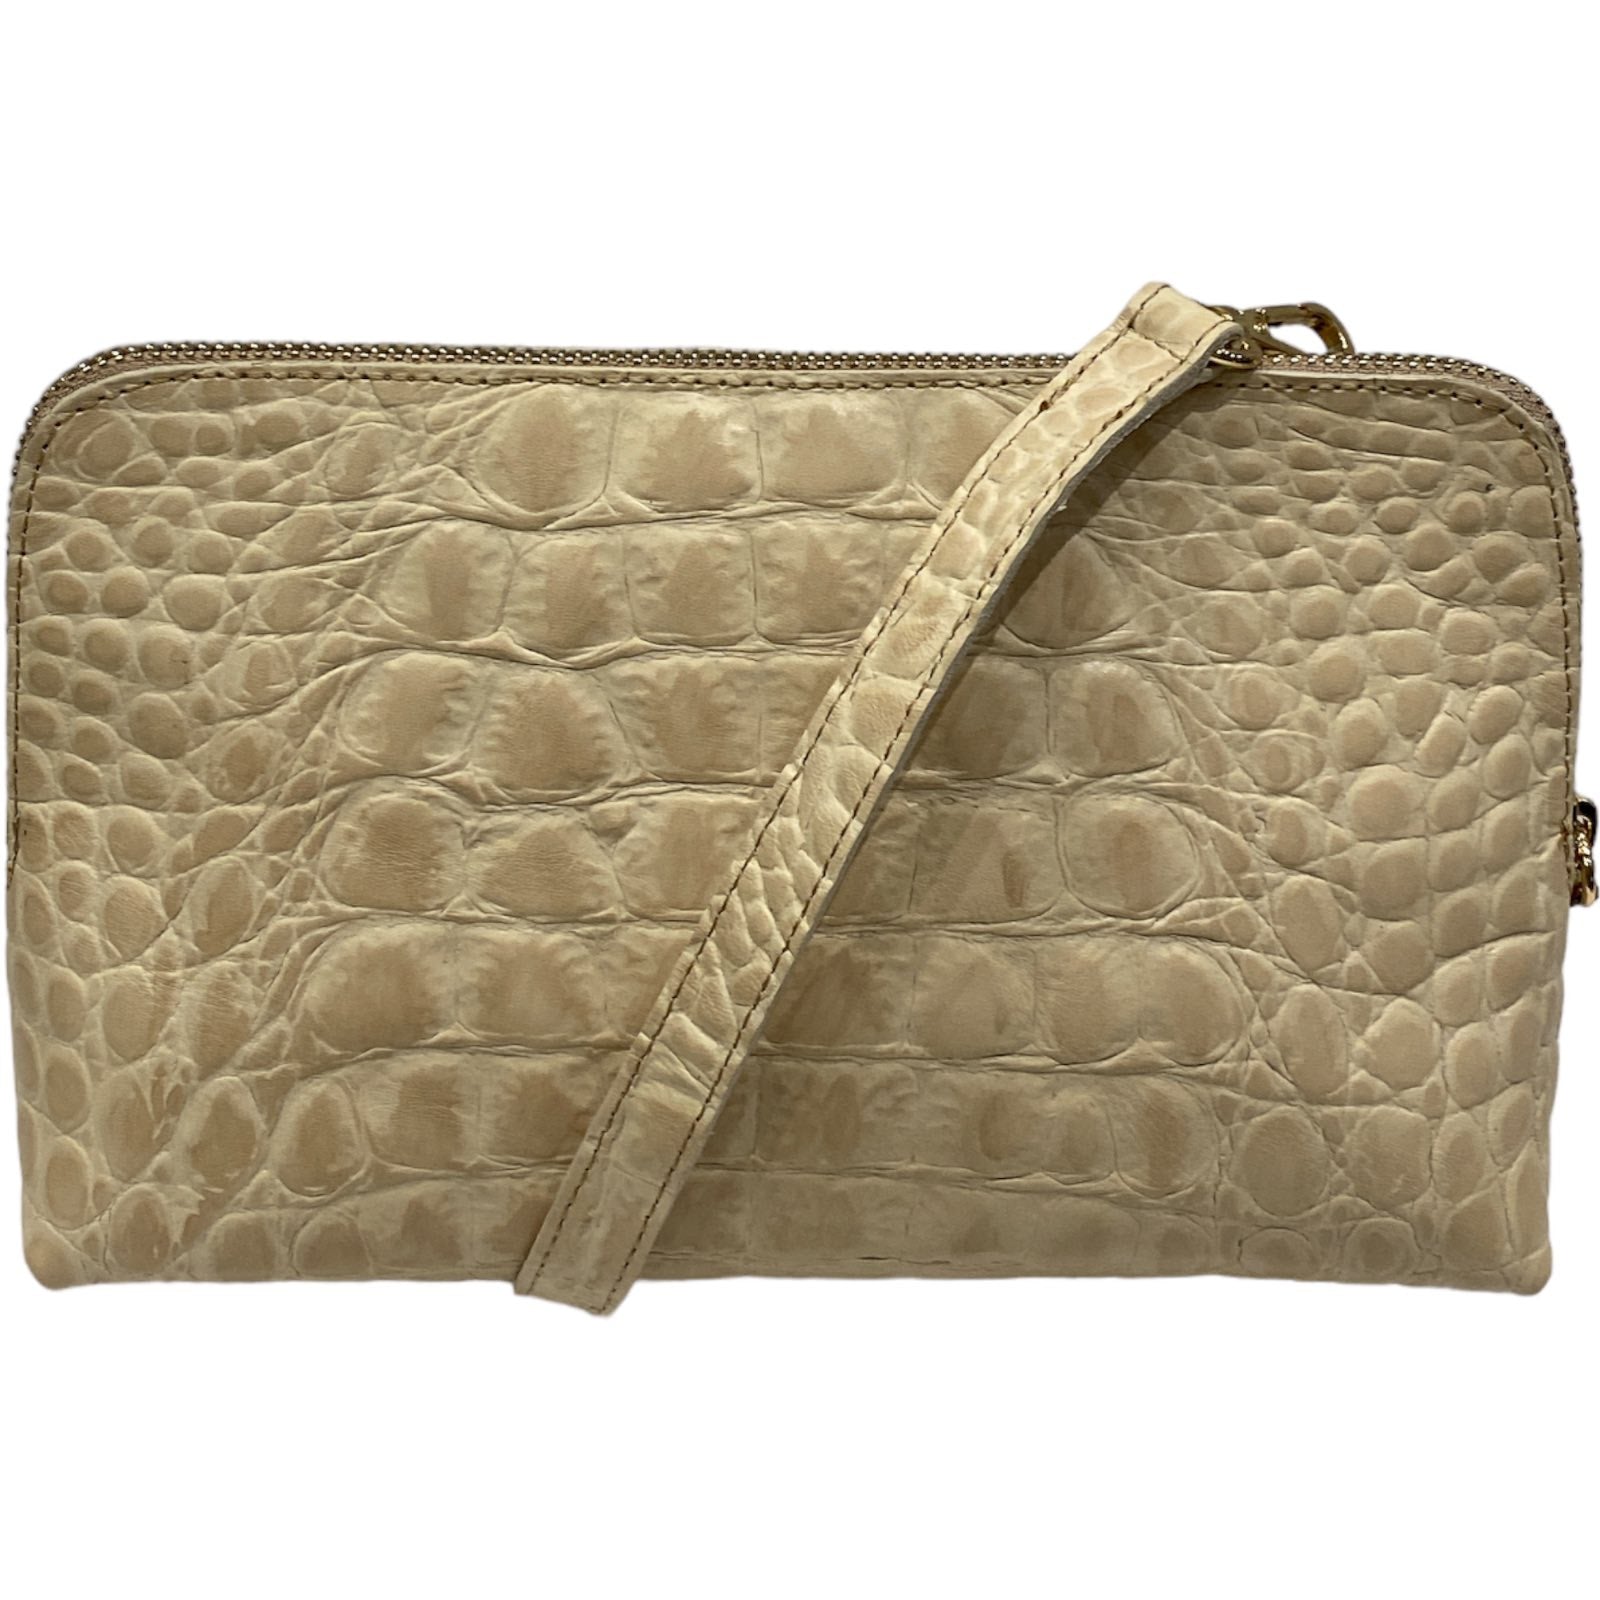 Box XL. Beige alligator-print leather messenger bag